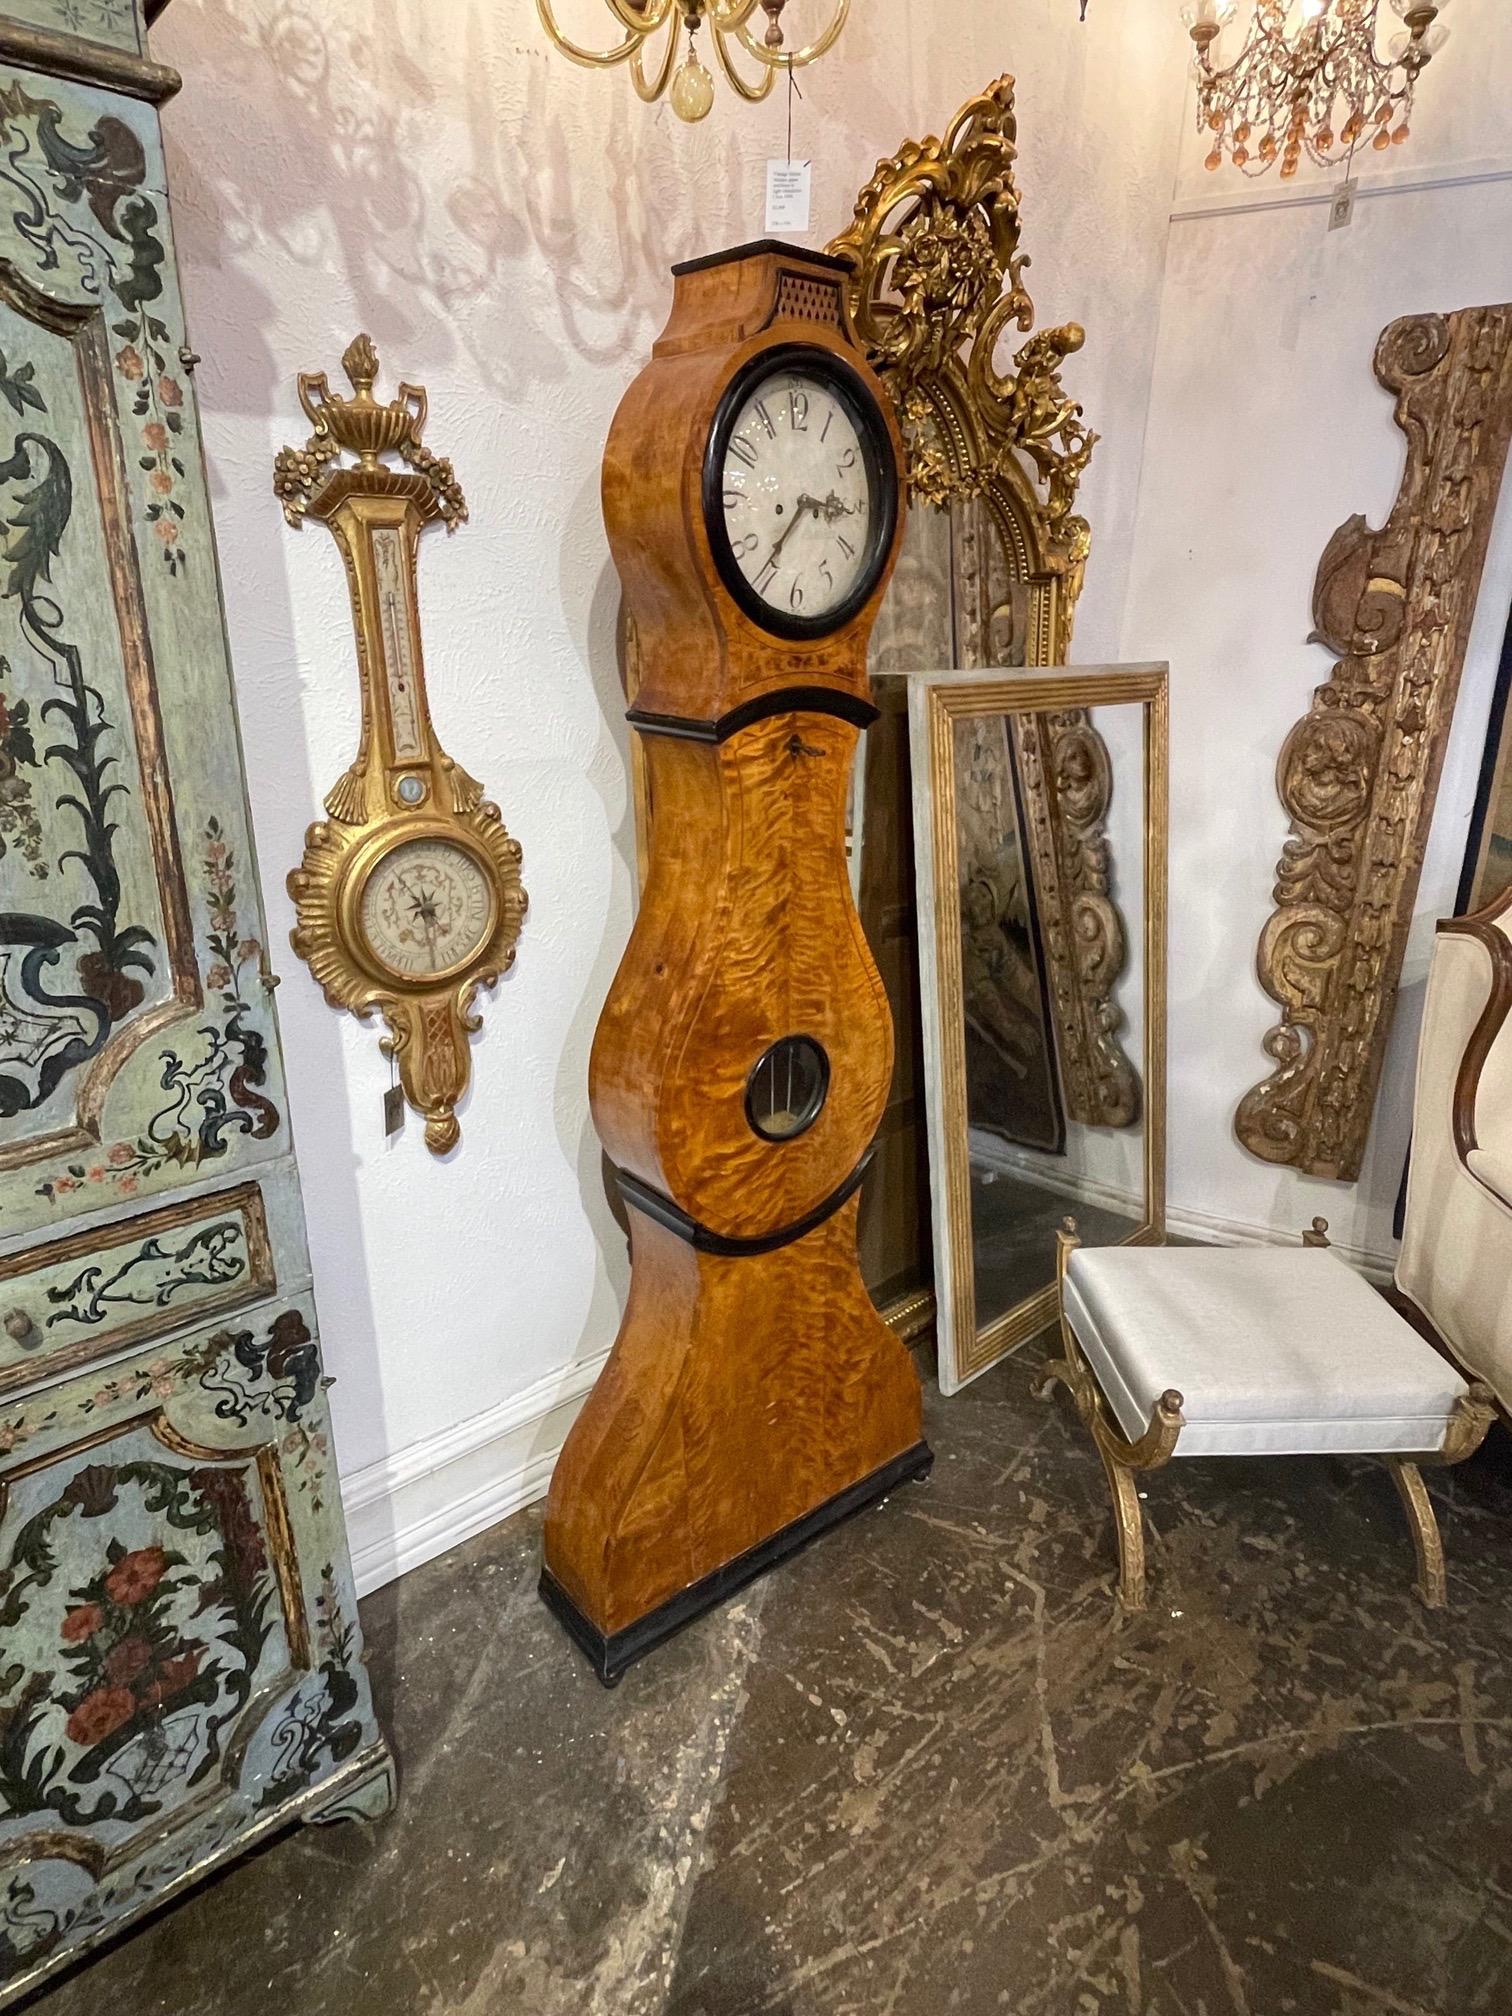 Handsome 19th century Austrian Biedermeier crotch maple grandfather clock. Beautiful wood grain and ebonized details. Very special!